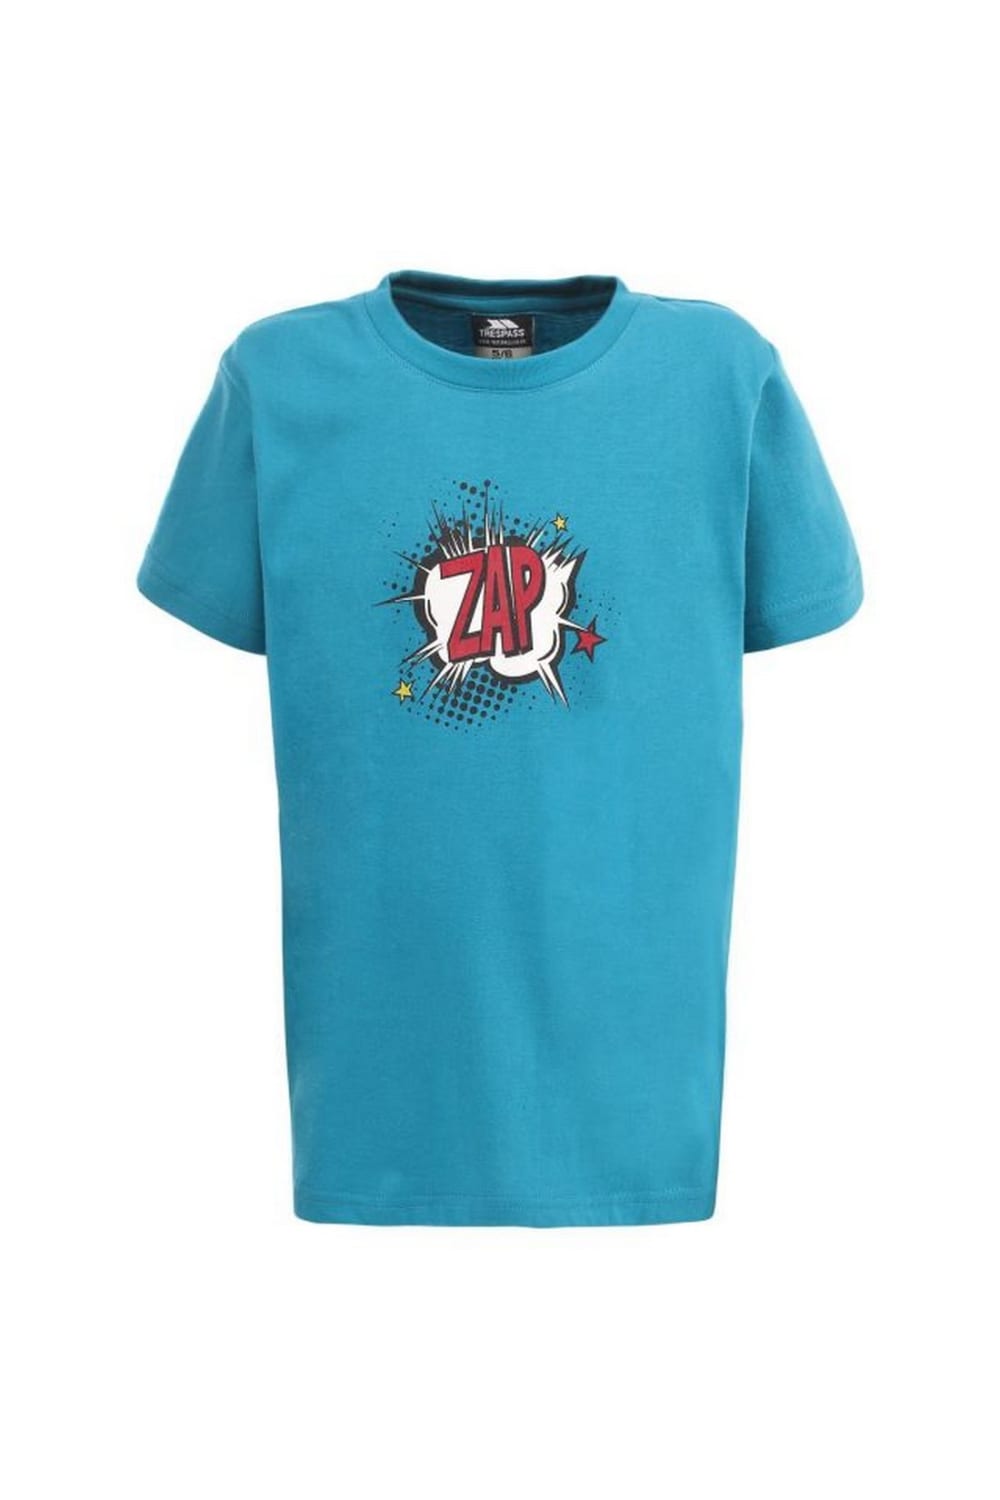 Trespass Childrens/Boys Zap Comic T Shirt (Marine)